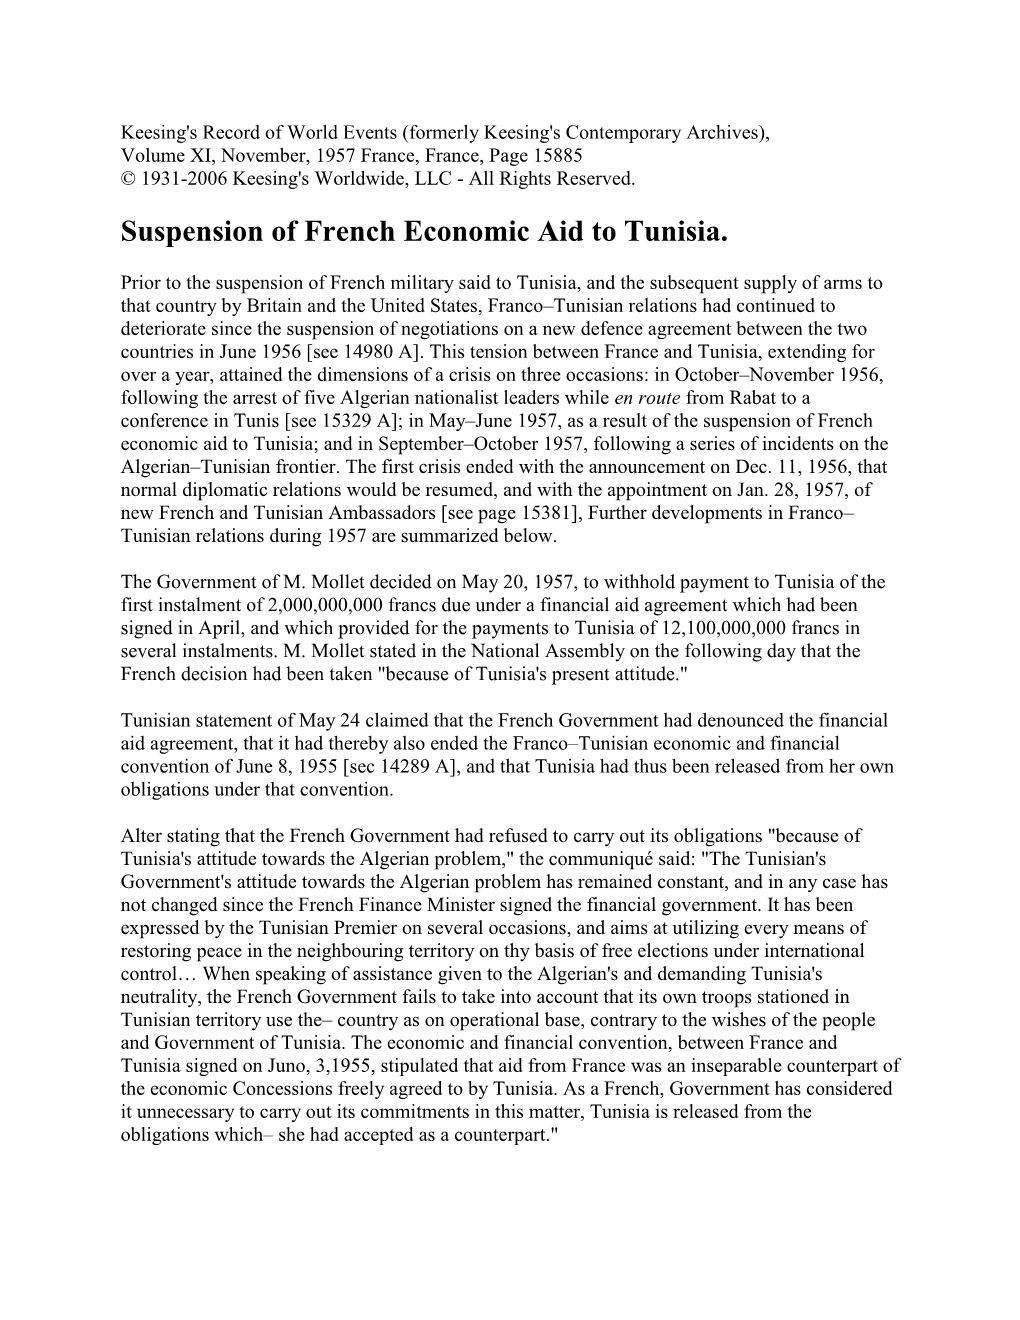 Suspension of French Economic Aid to Tunisia